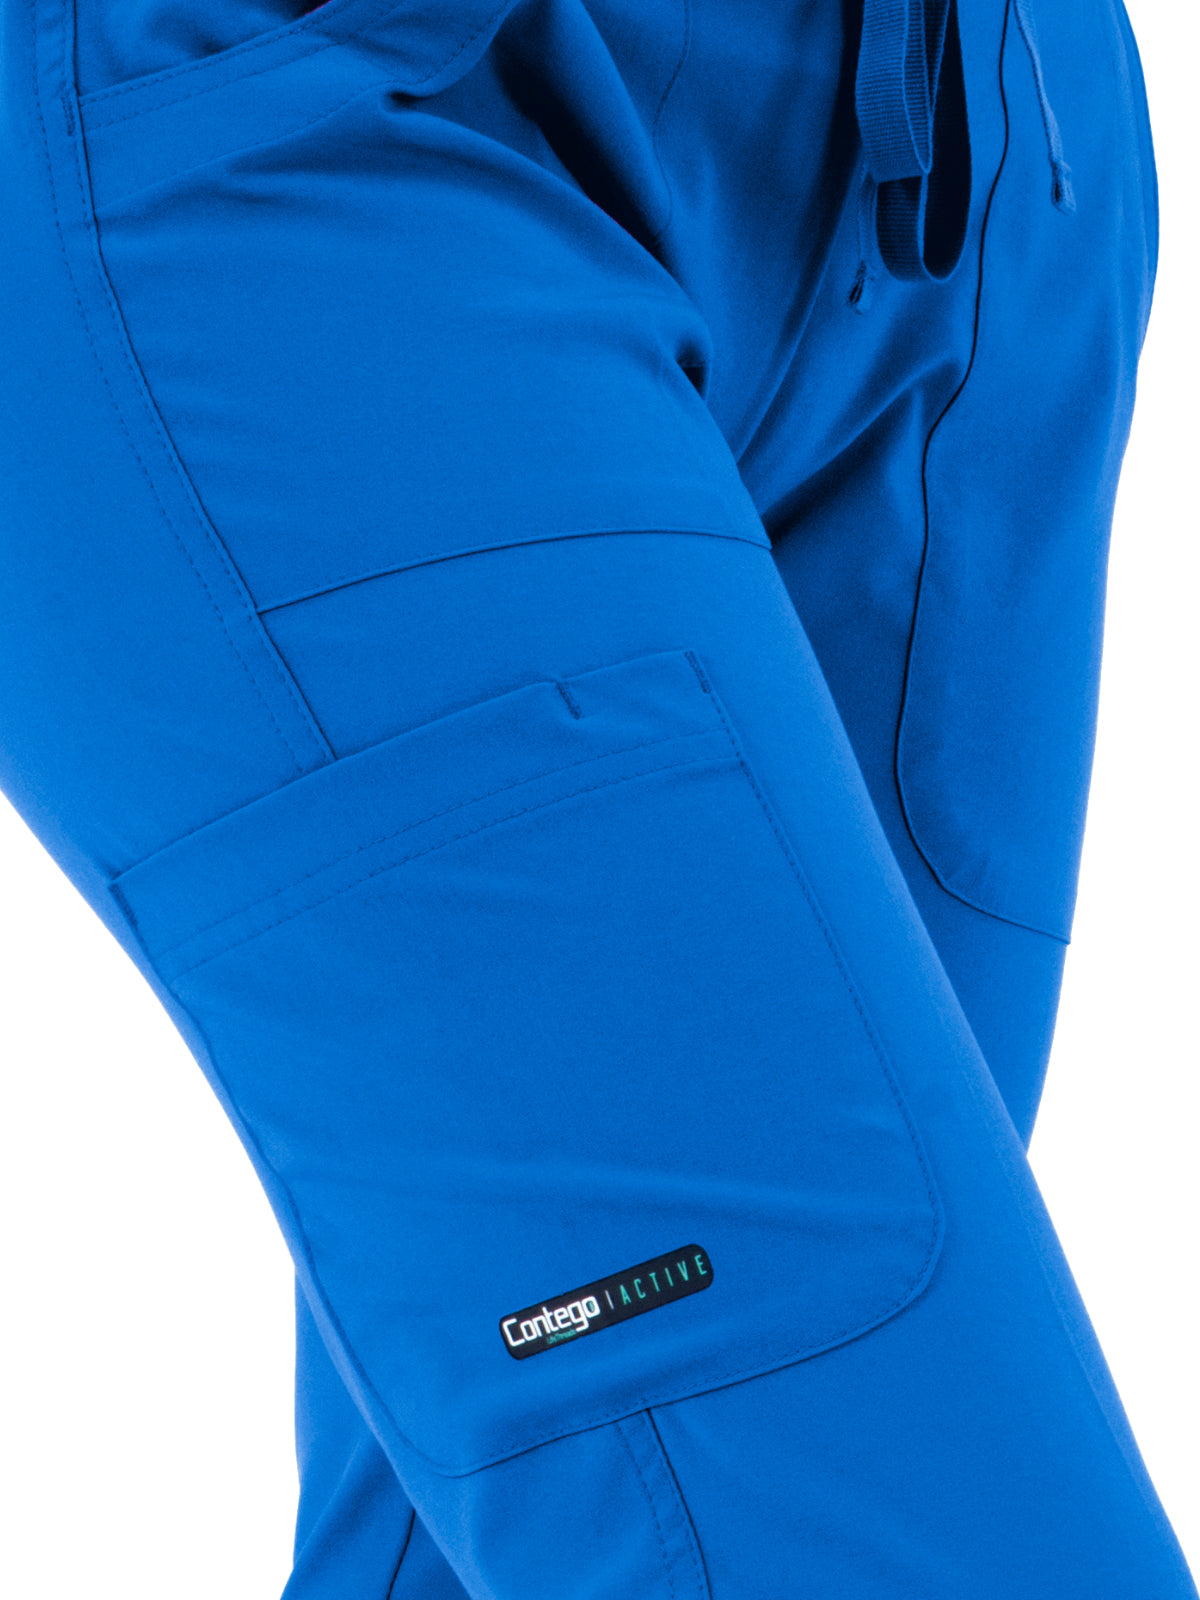 Women's Cargo Pant - 1528 - Royal Blue